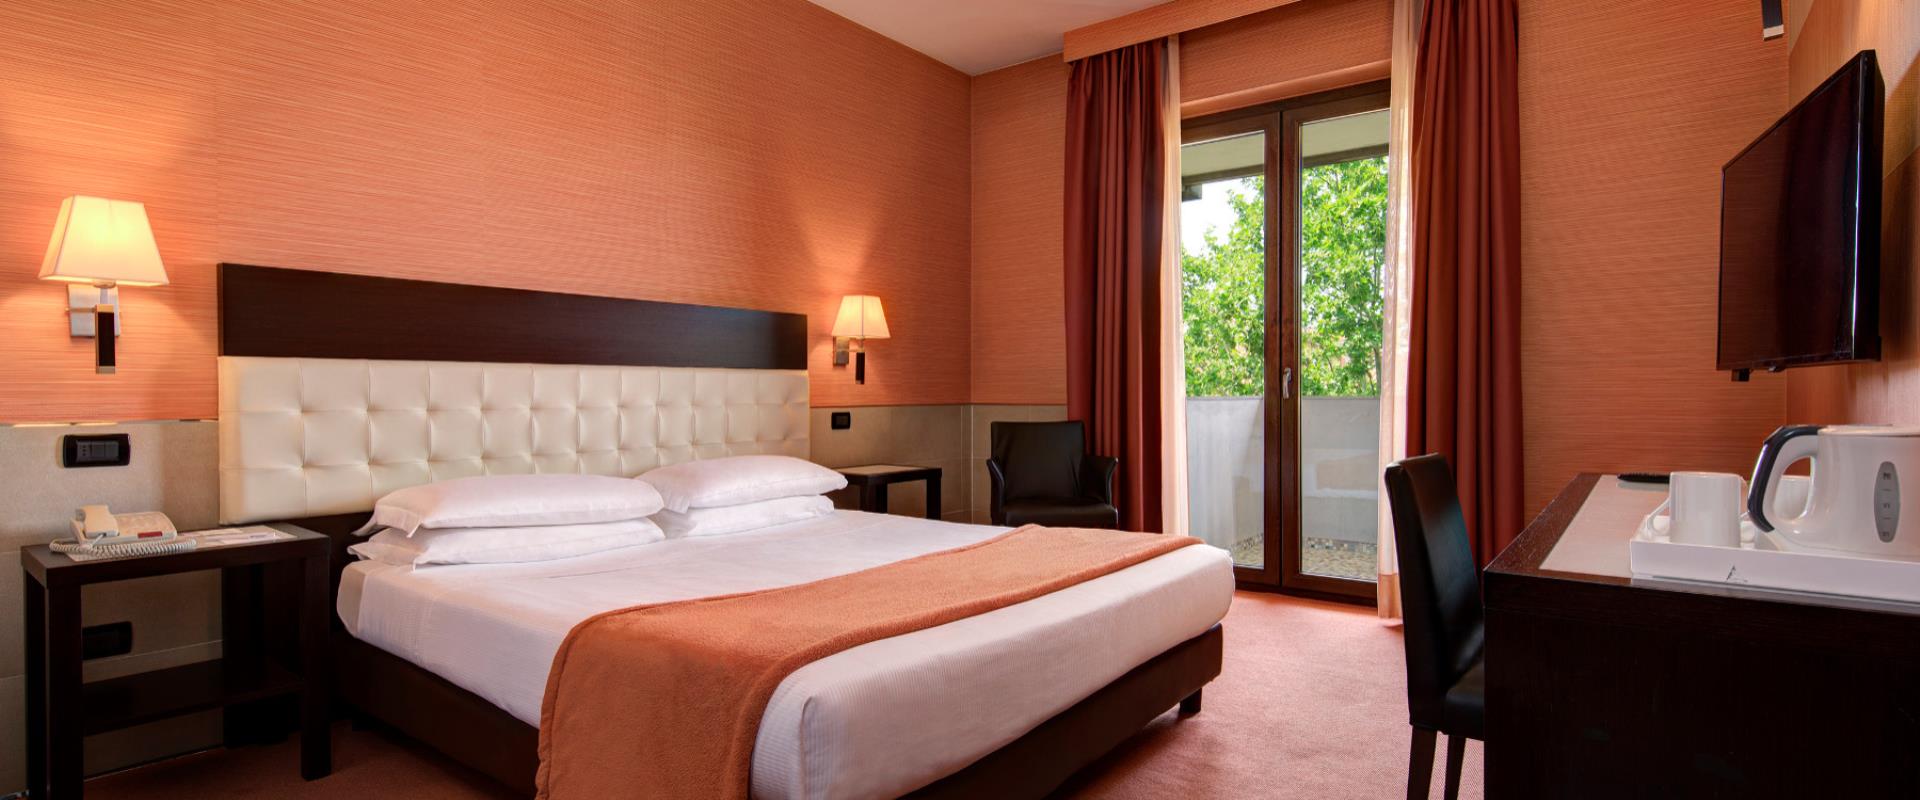 Double Room - Best Western Gorizia Palace Hotel